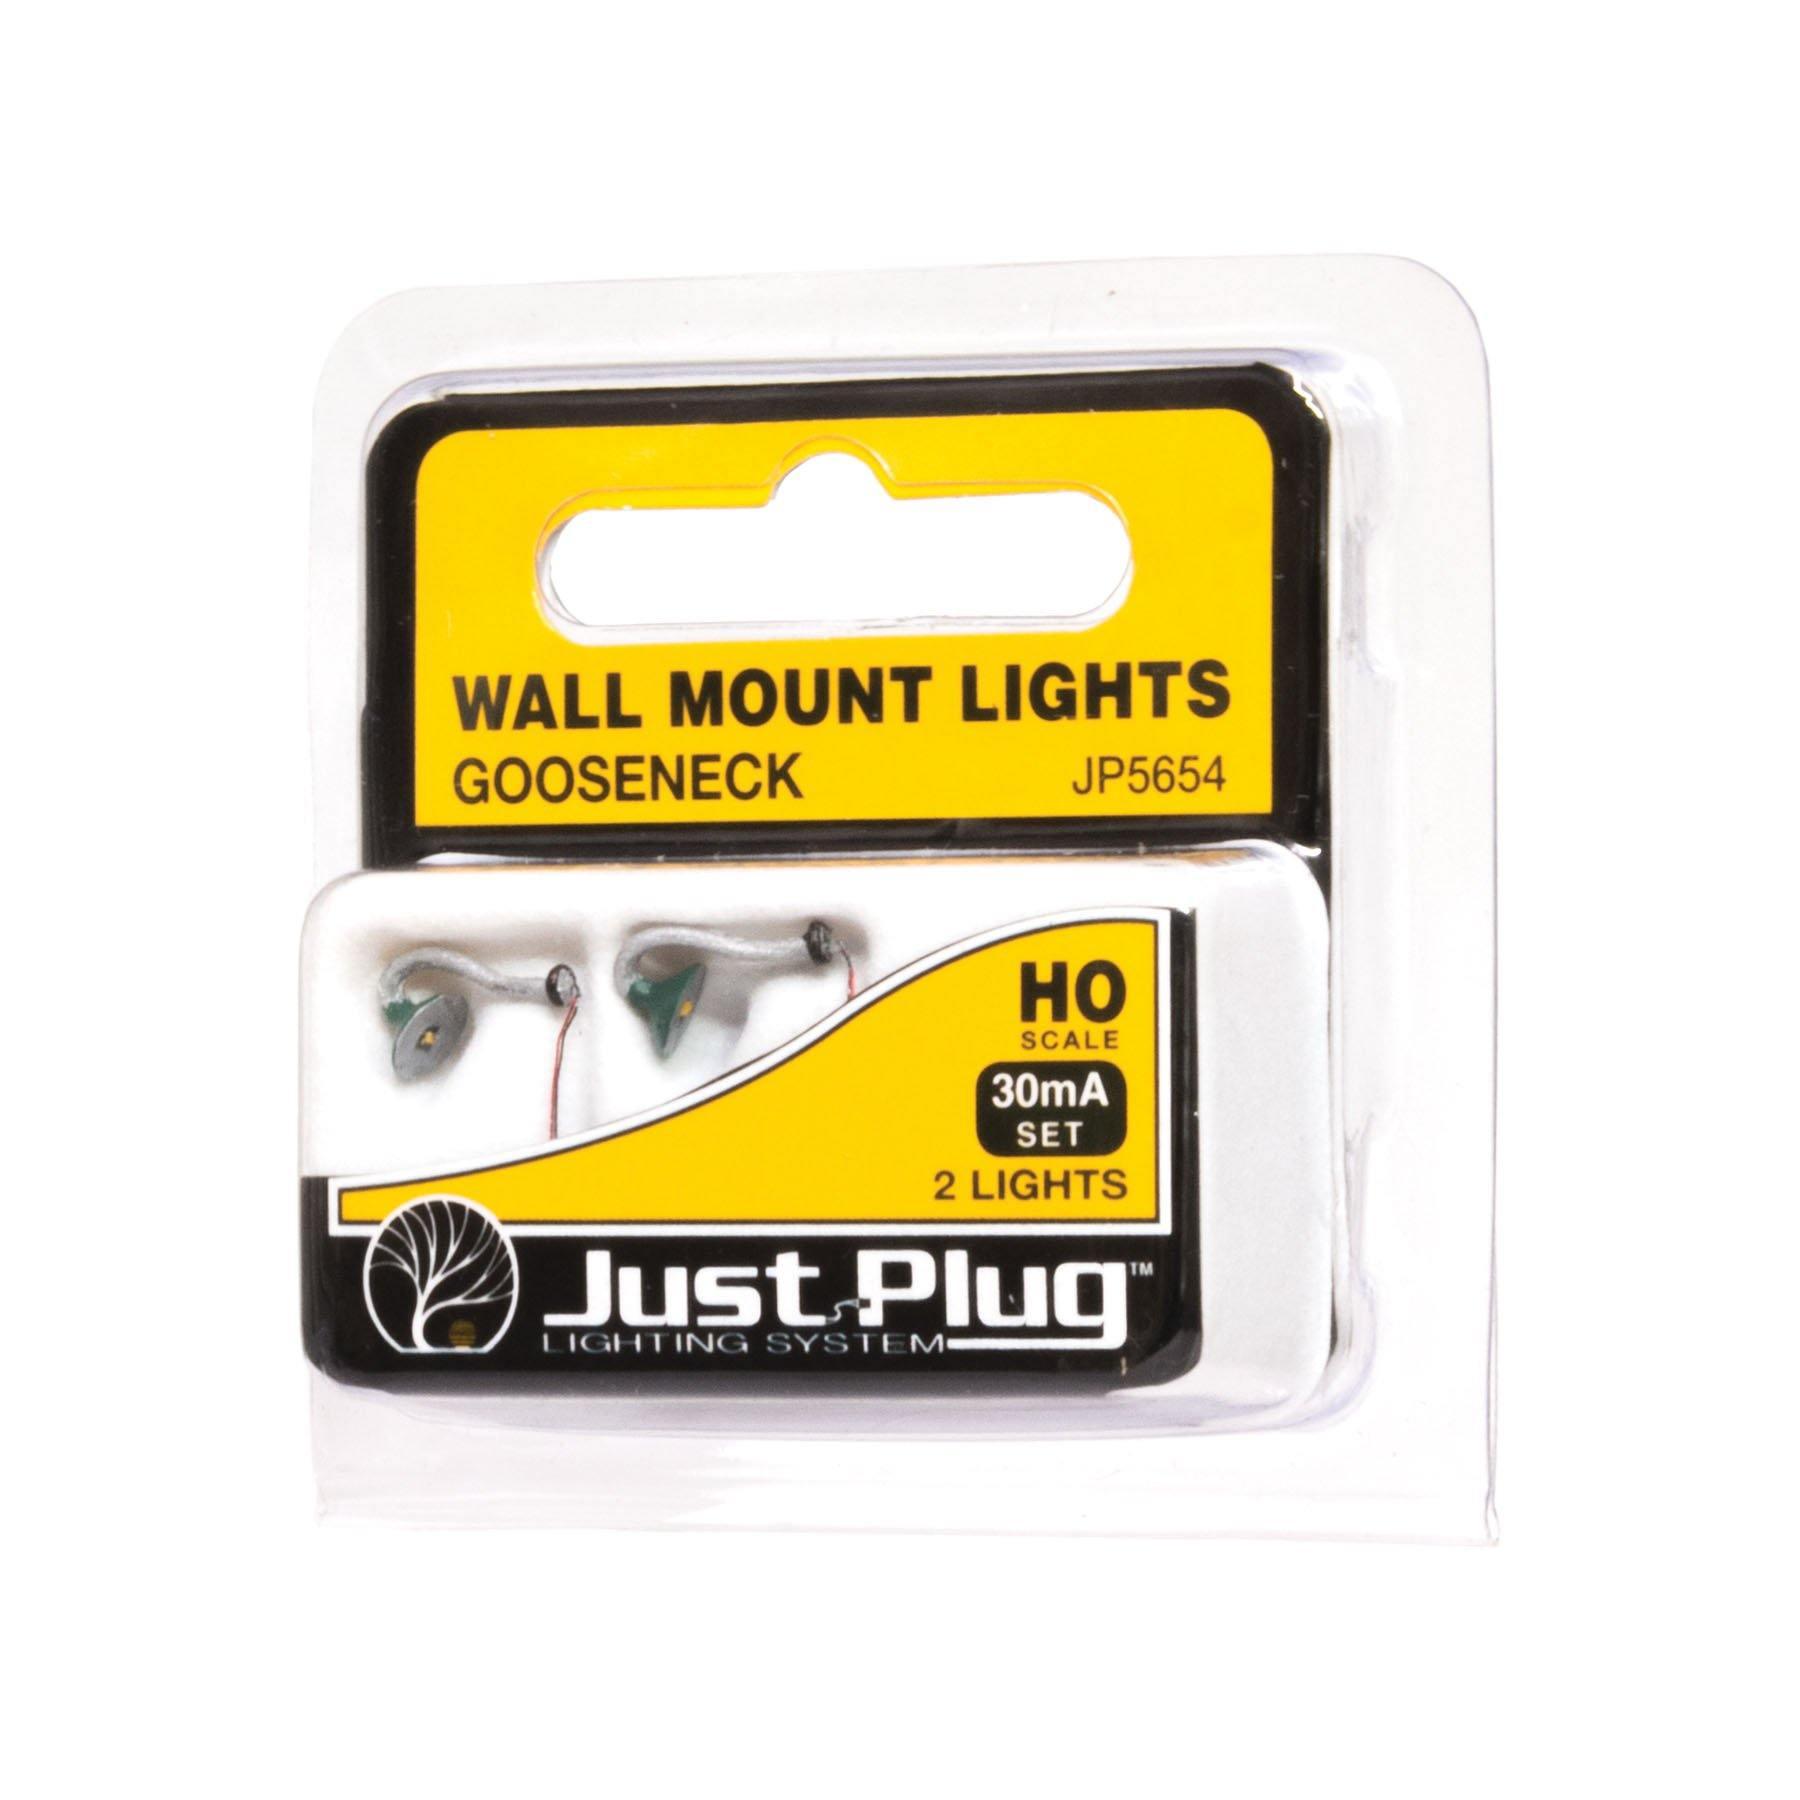 Woodland Scenics 5654 | Just Plug Lighting System - Gooseneck Wall Mount Lights | HO Scale